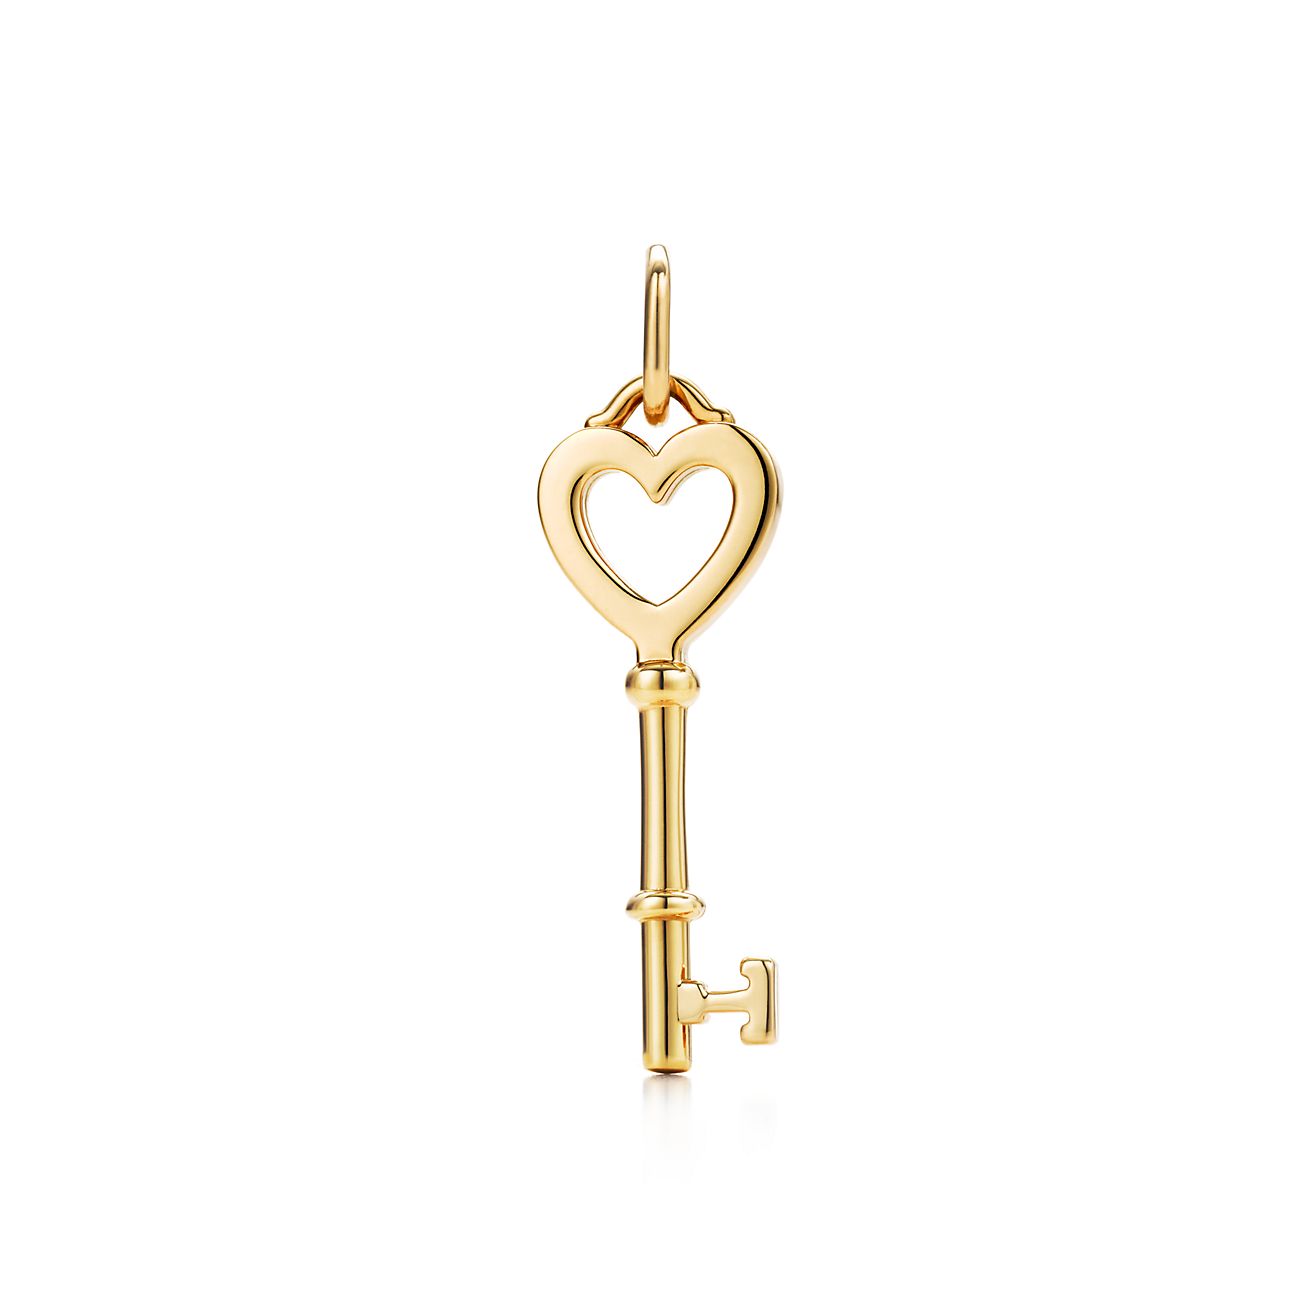 Tiffany Keys 18K Gold Heart Key Pendant 